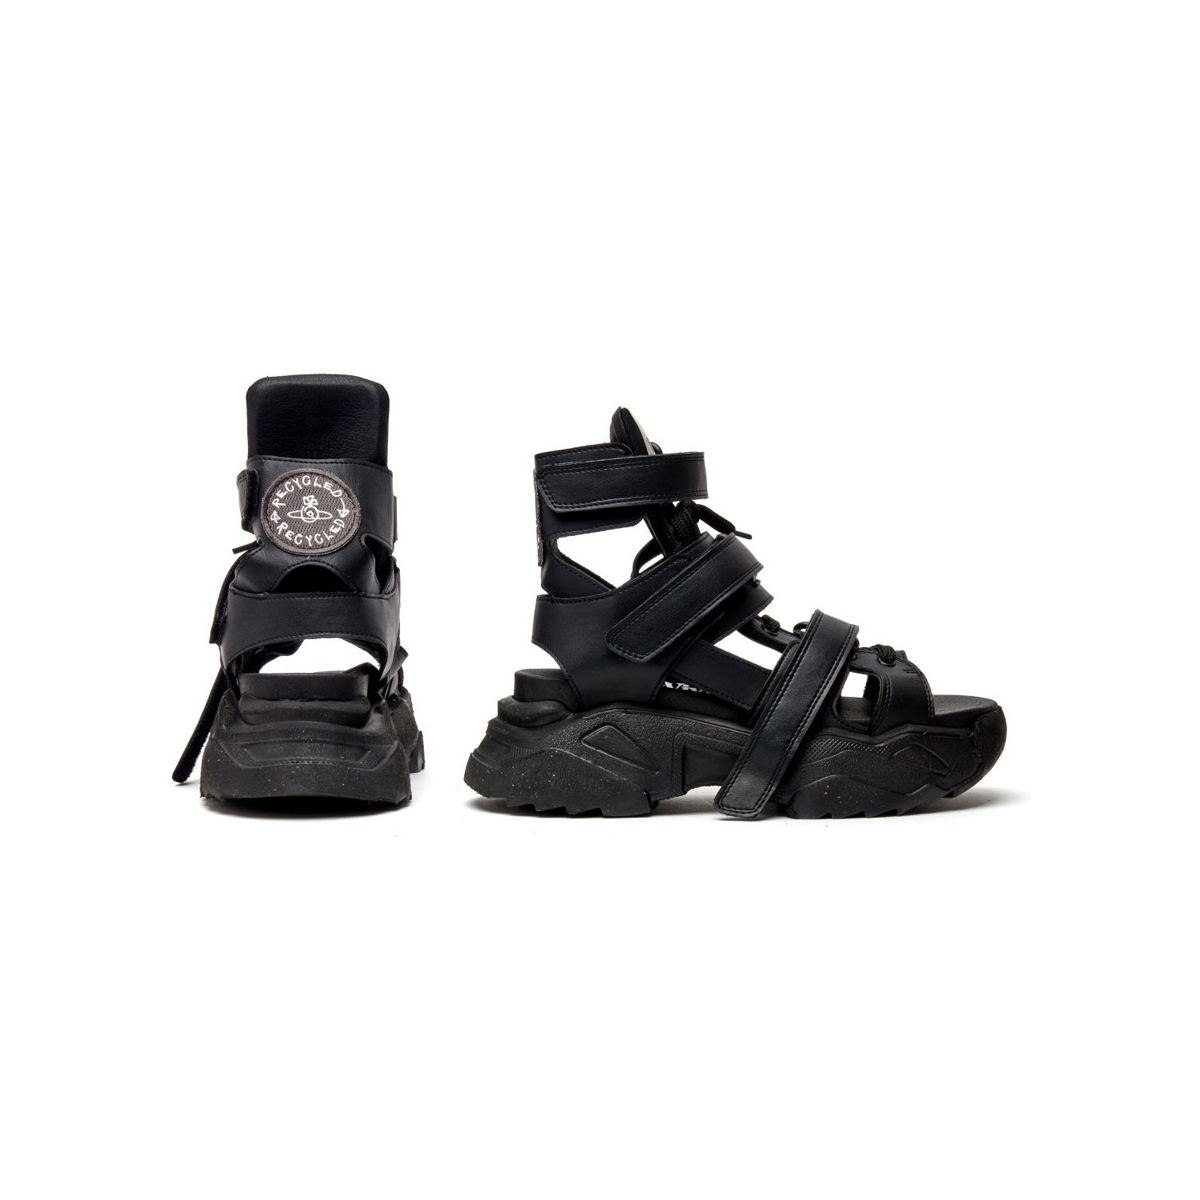 vlotter stel voor Fokken Vivienne Westwood SS22 Dad-Style "Romper" Sandals: Price